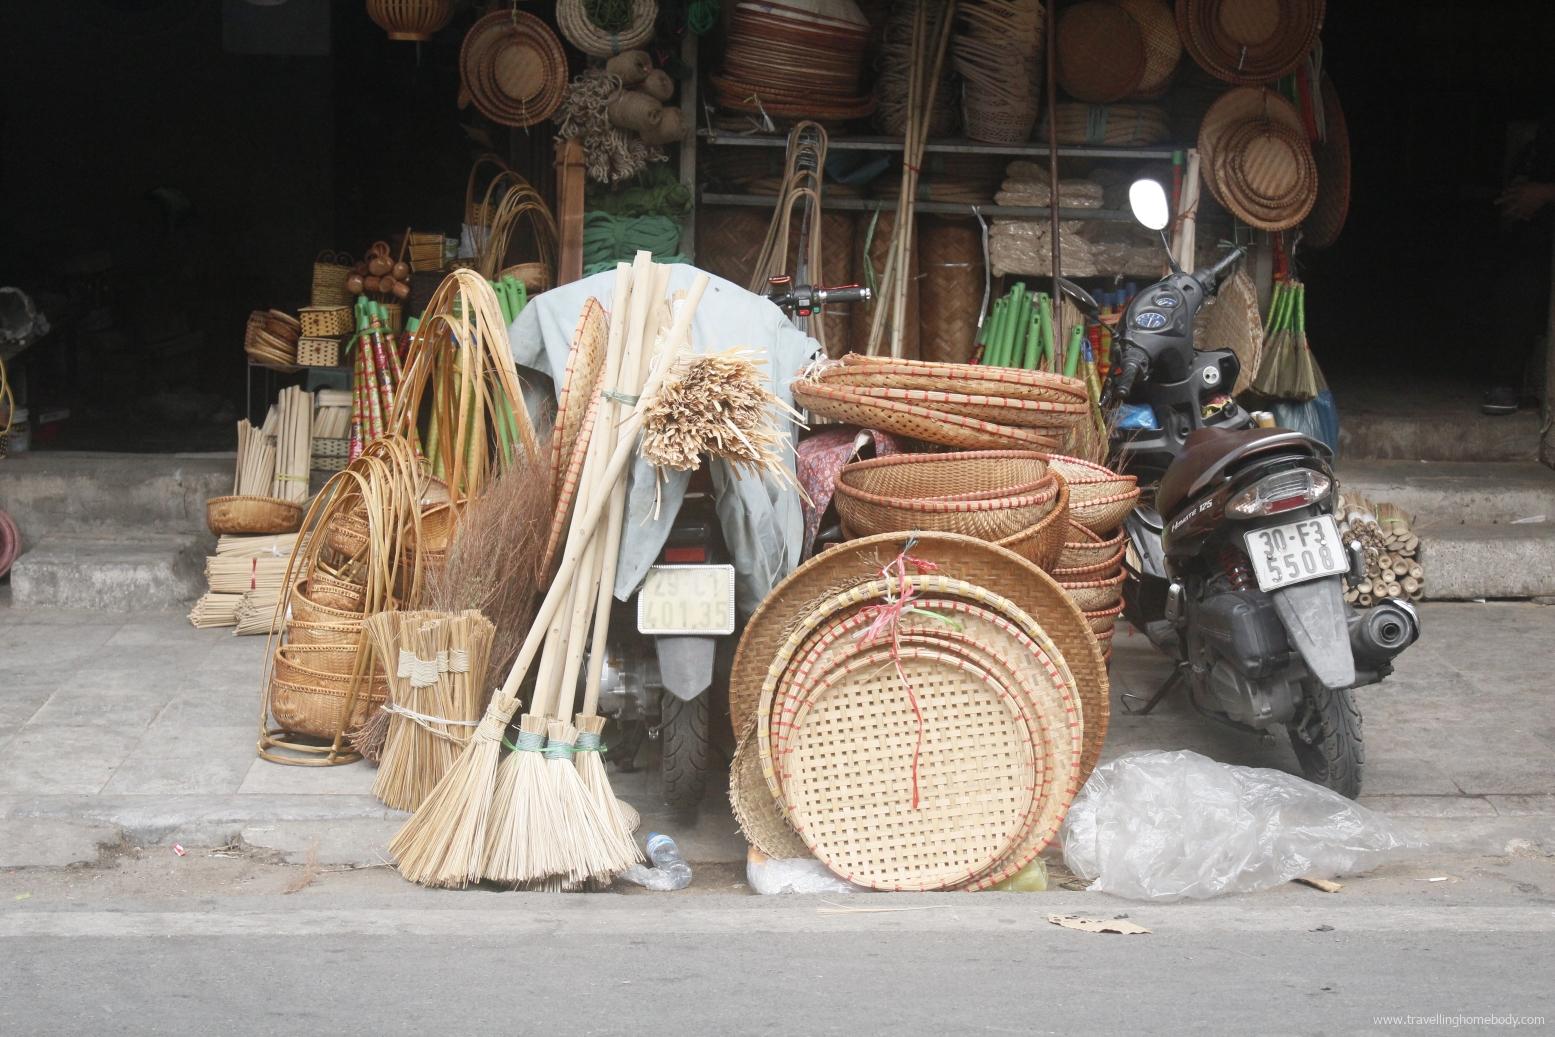 Travelling Homebody's photo essay of Tet in Hanoi